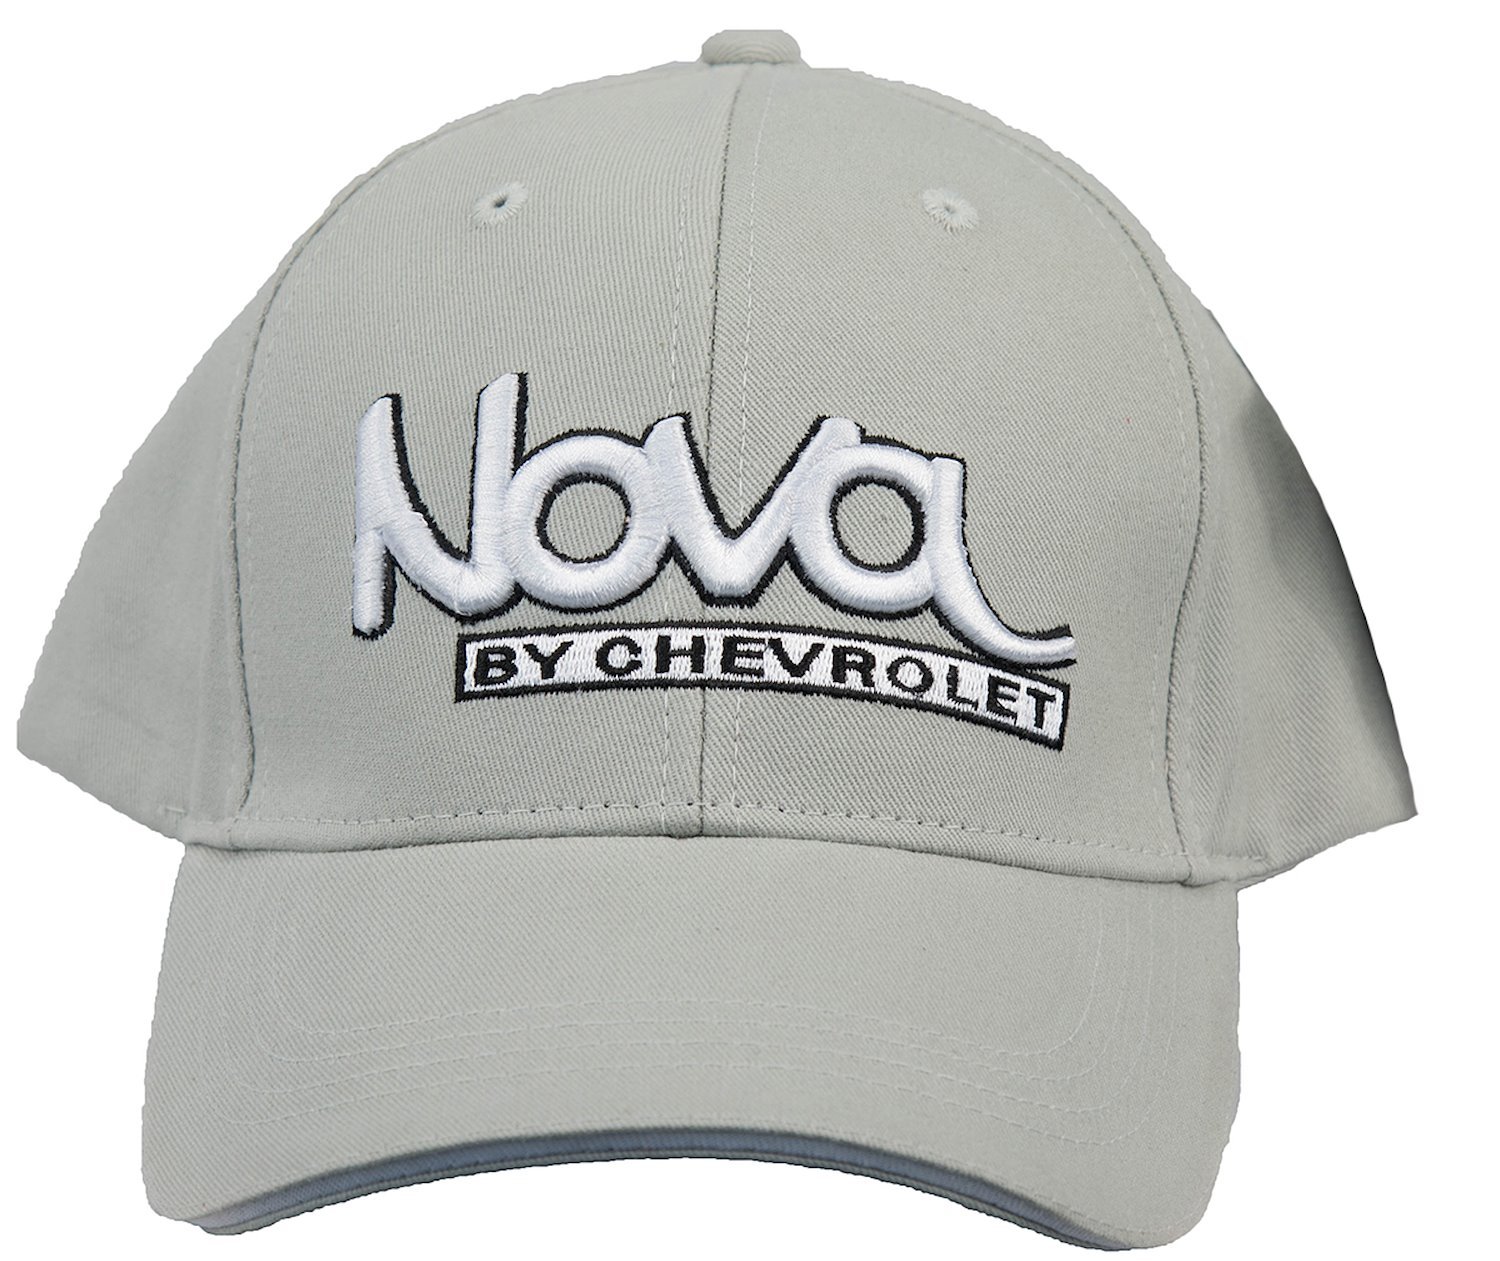 JEGS H240 "Nova by Chevrolet" Hat